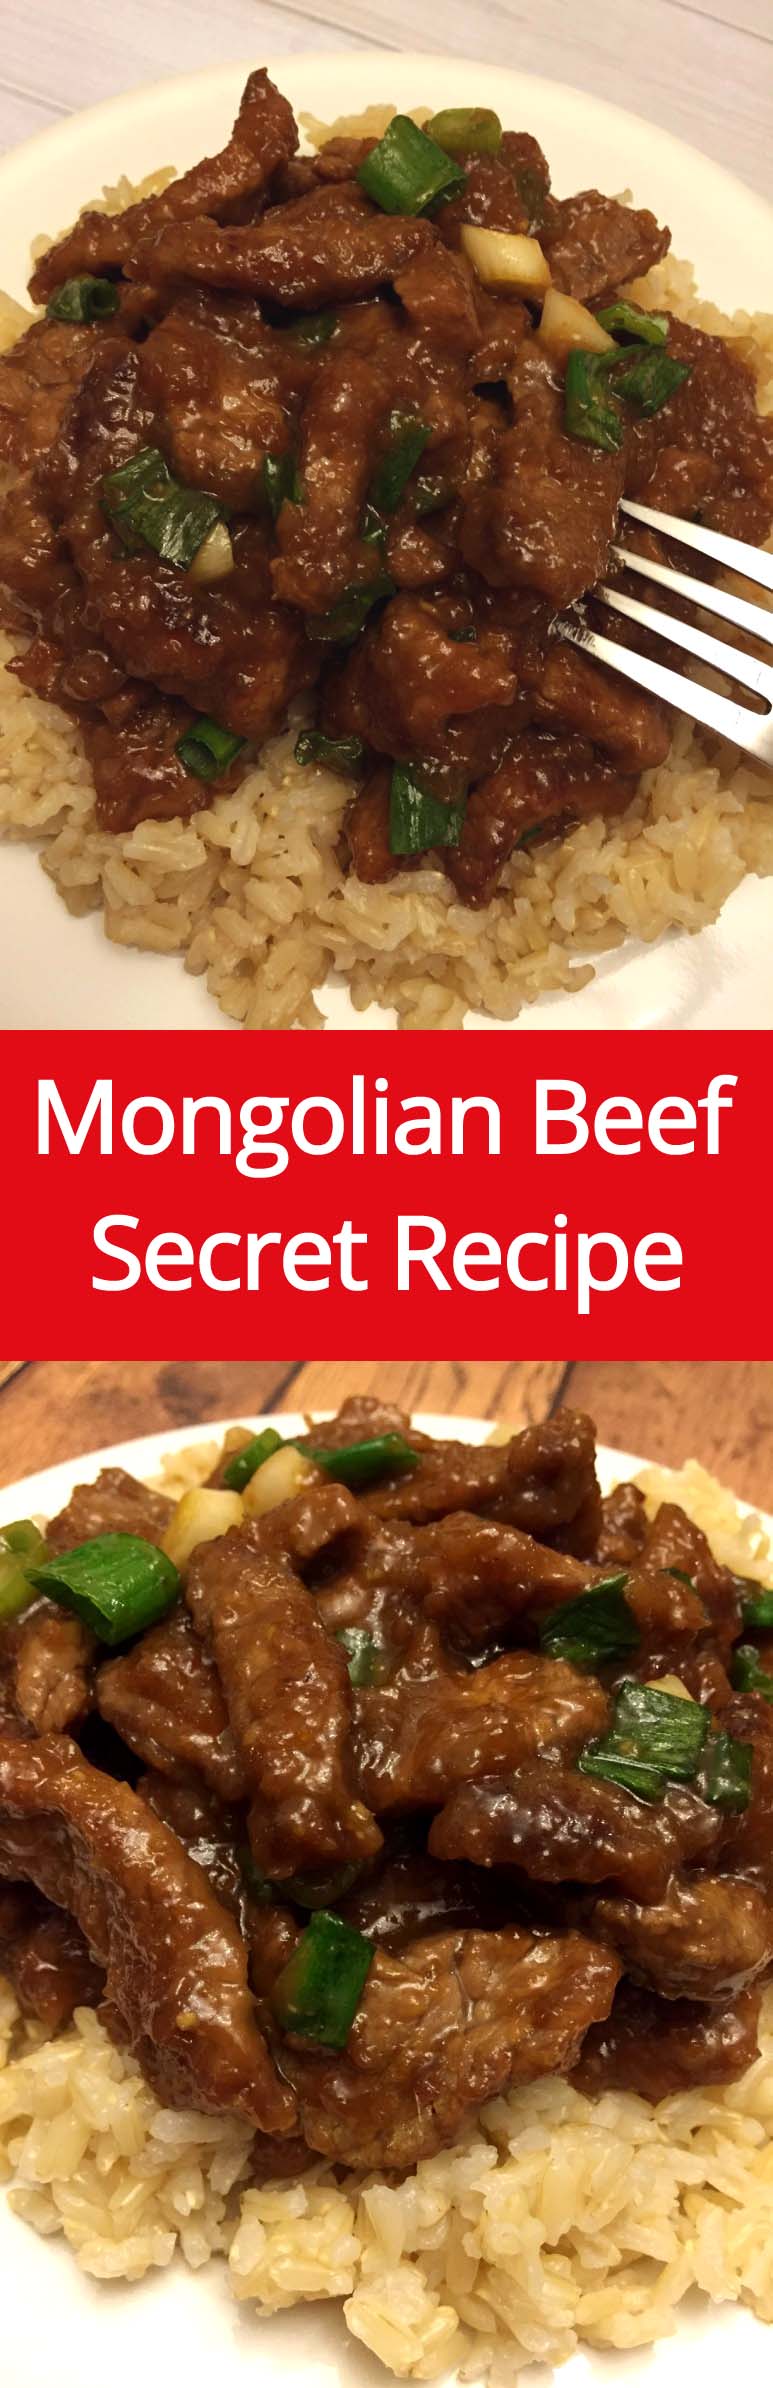 Mongolian Beef Recipe - Secret Copycat Recipe To Make Mongolian Beef Like P.F.Chang's! | MelanieCooks.com